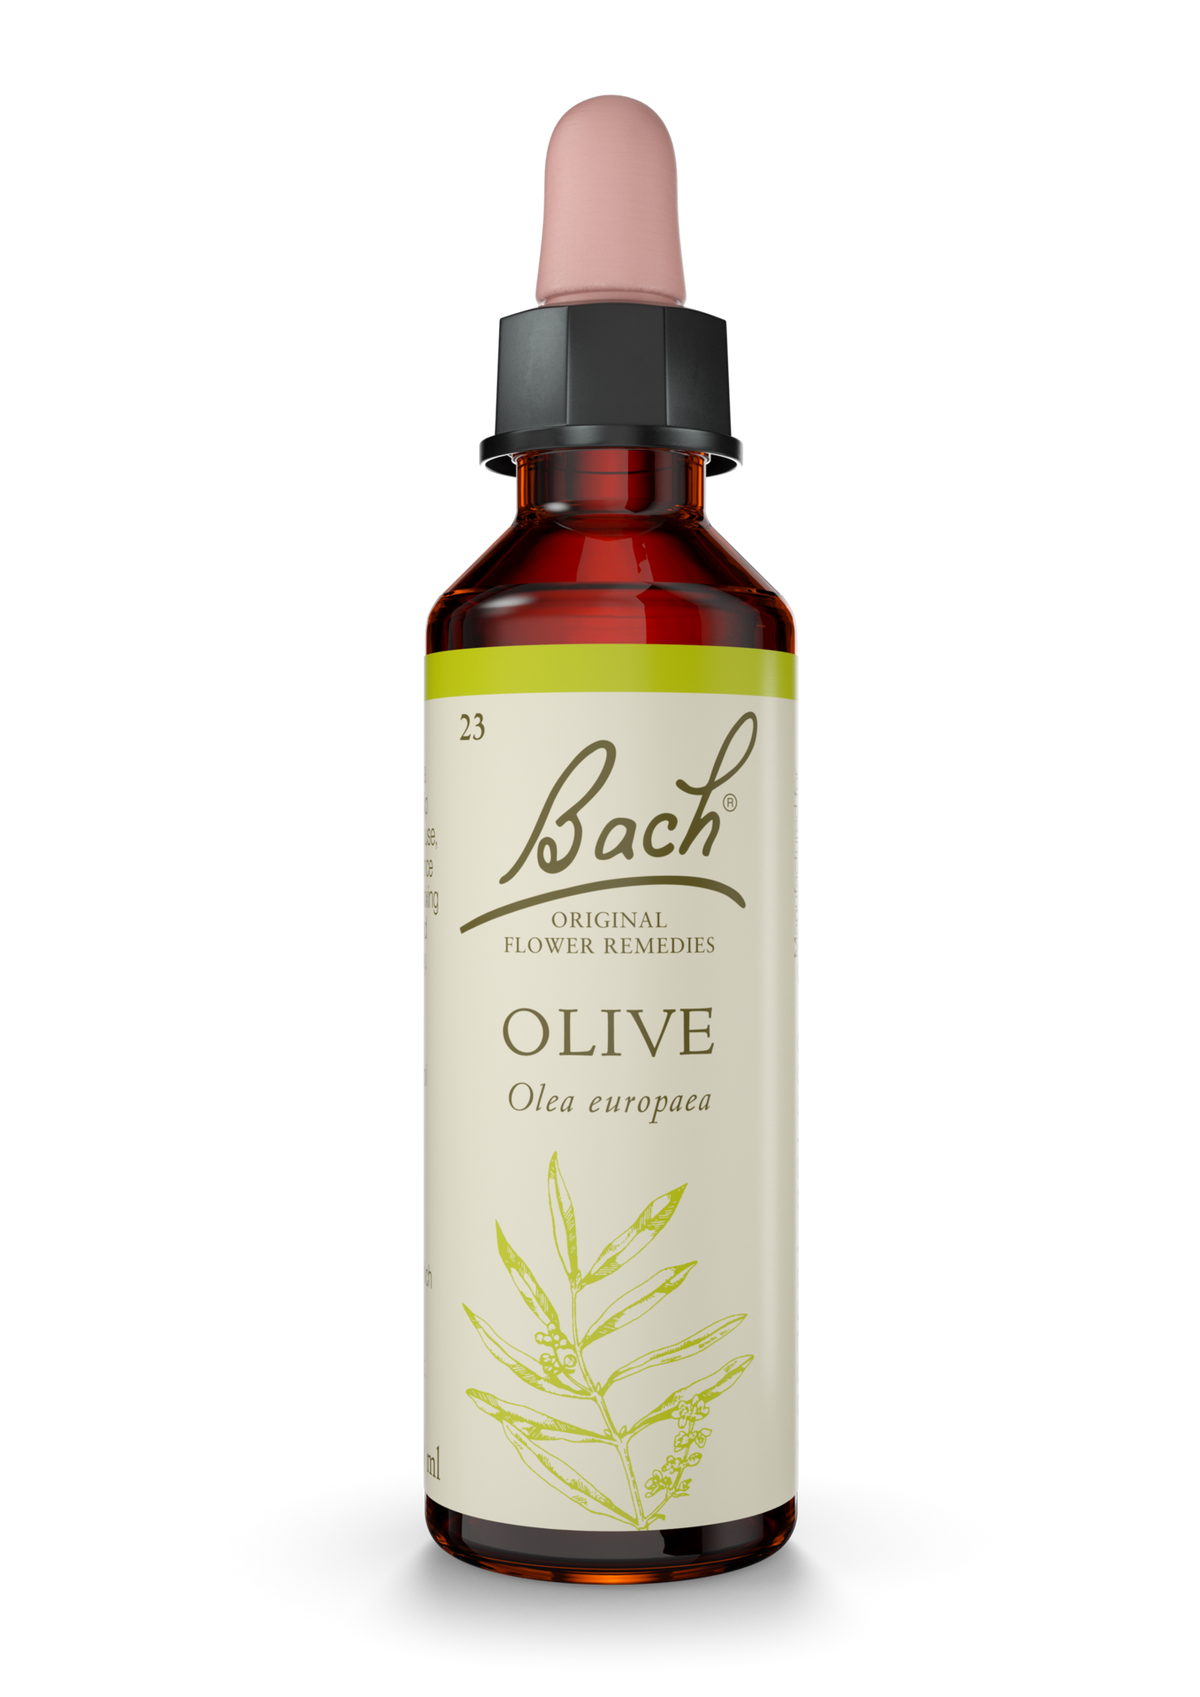 Bach Original Flower Remedies Olive 20ml